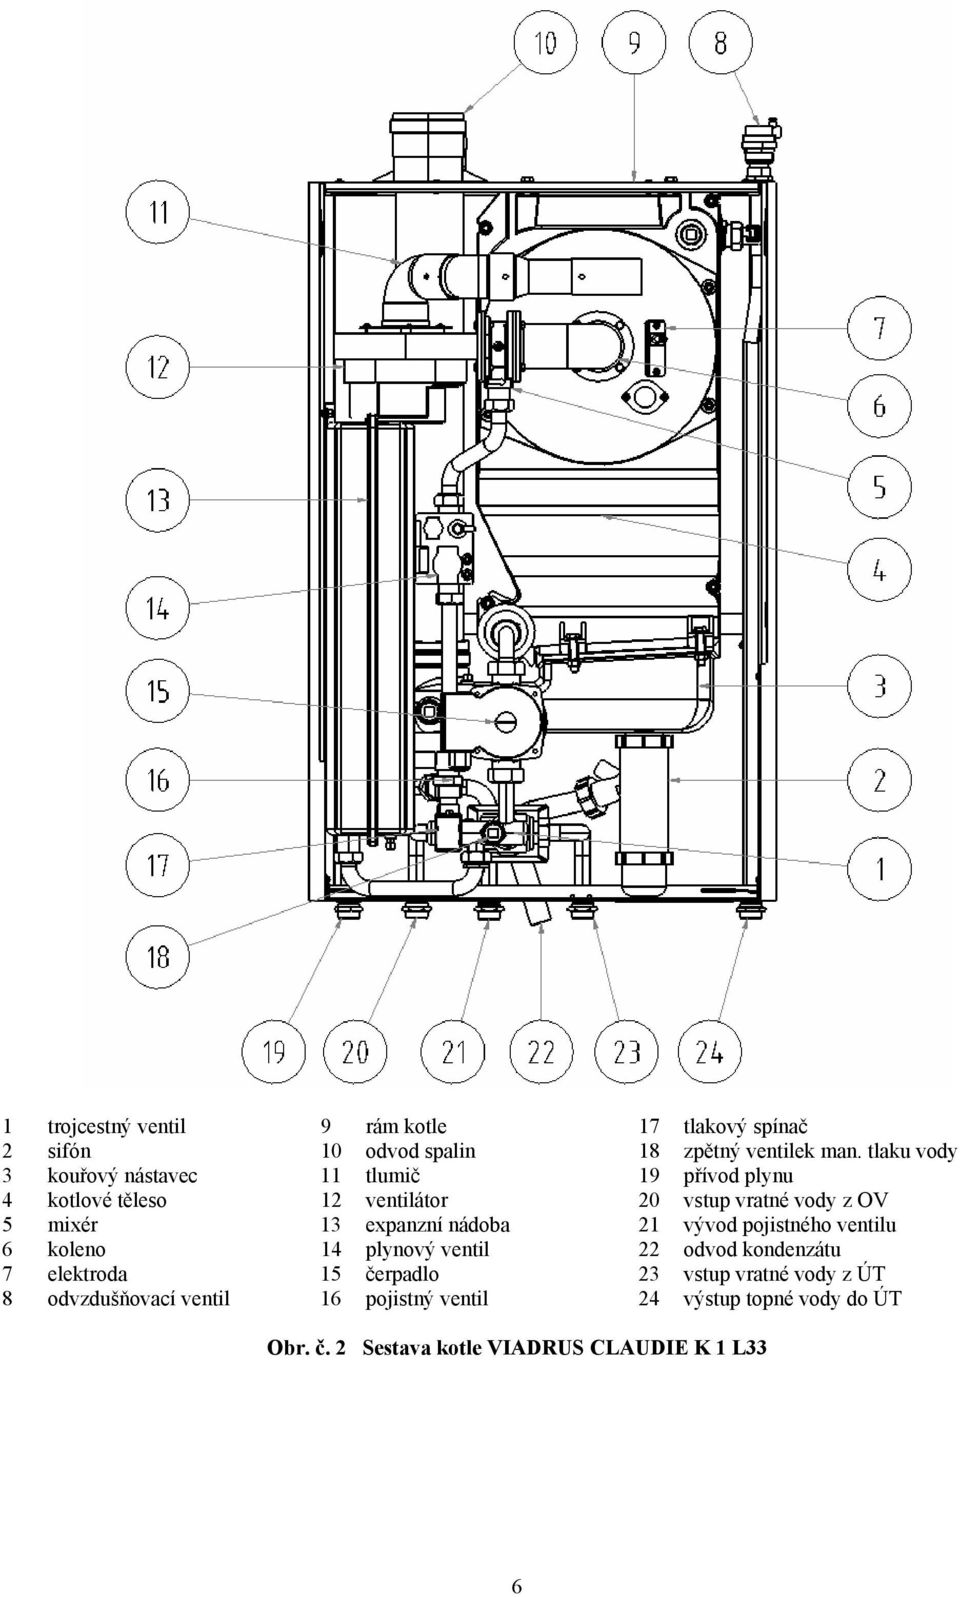 13 expanzní nádoba 21 vývod pojistného ventilu 6 koleno 14 plynový ventil 22 odvod kondenzátu 7 elektroda 15 čerpadlo 23